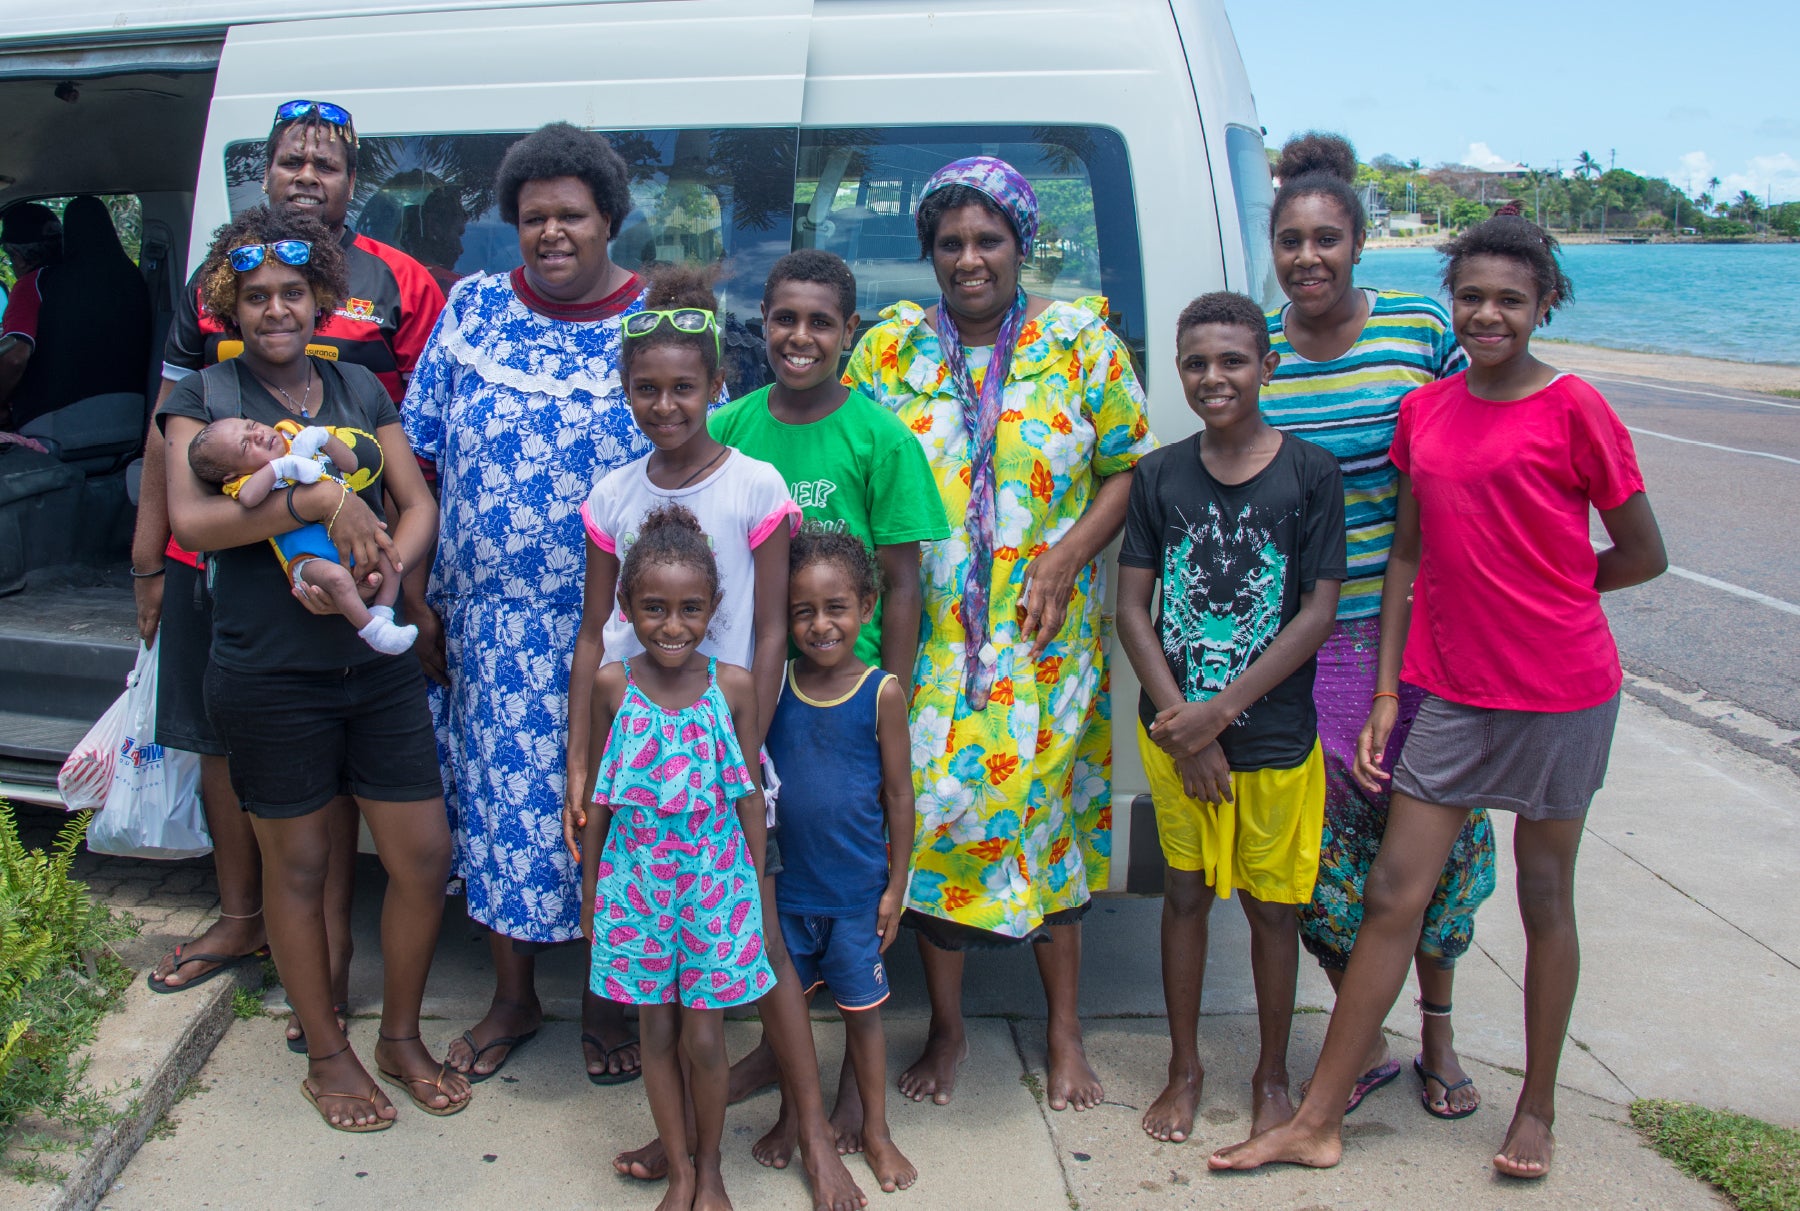 A Torres Strait Islander family on a beautiful beach.